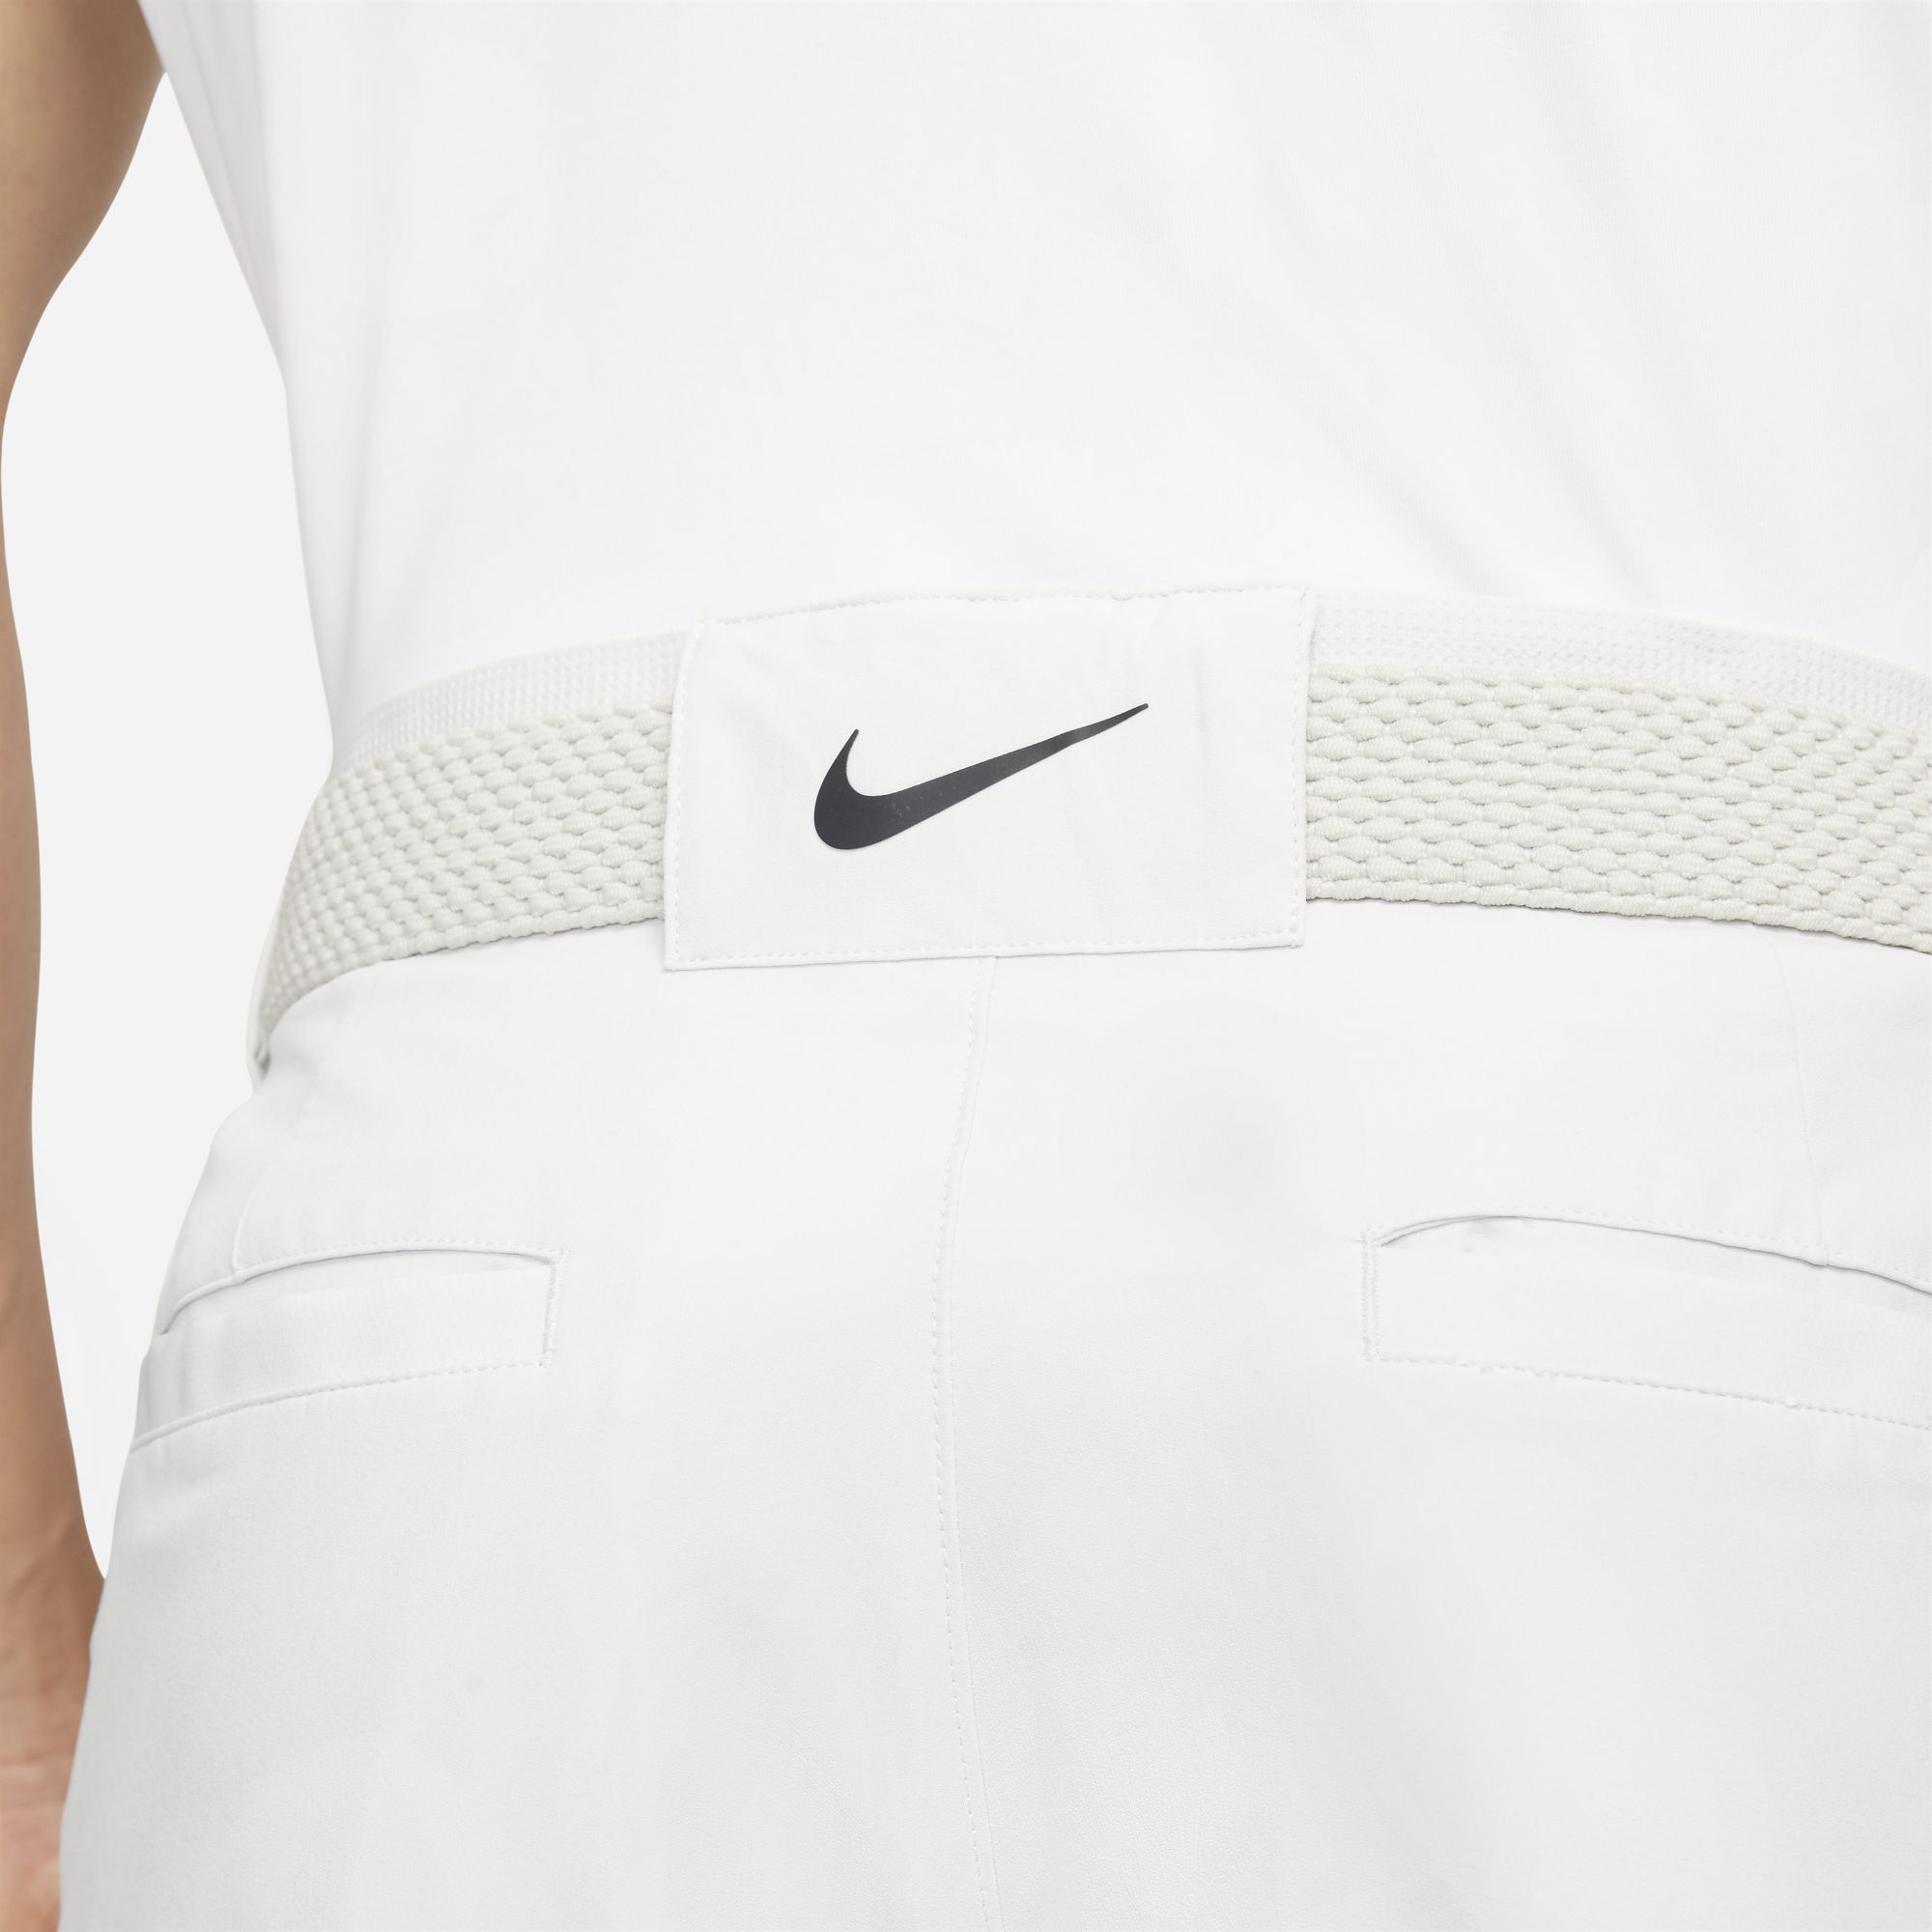 Nike | DA3062-025 | Dri-FIT Vapor Slim Pant | Dust